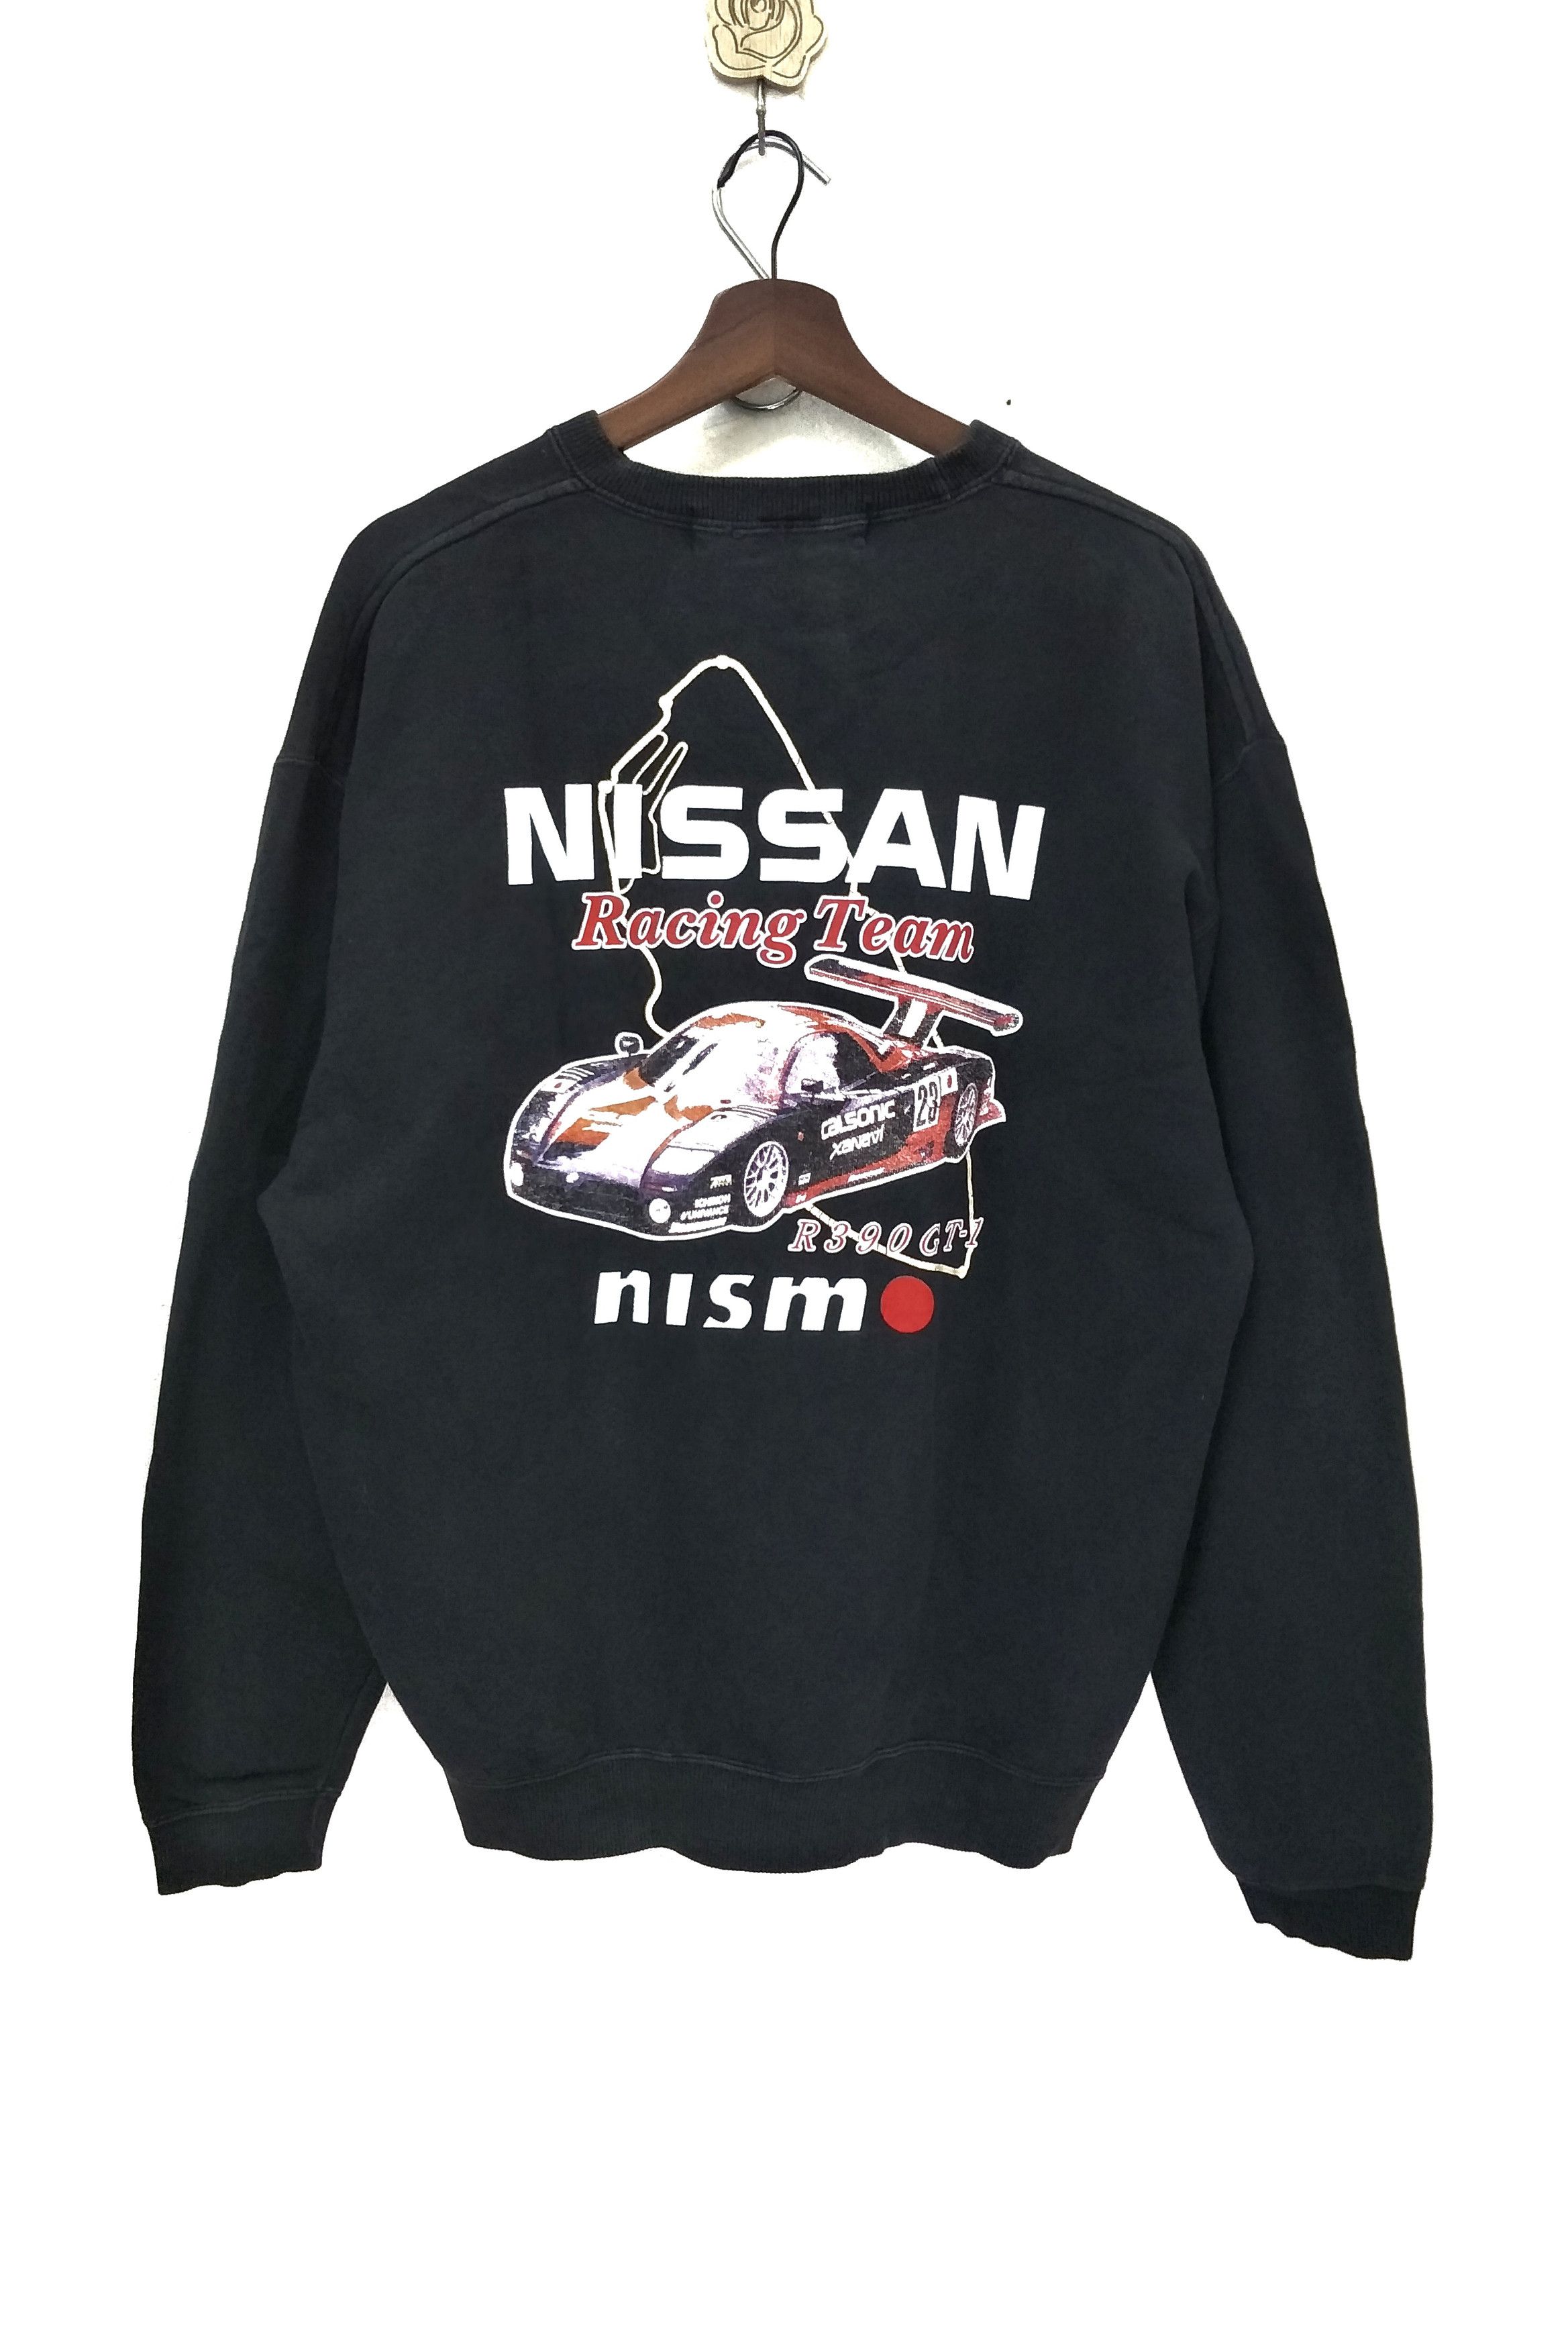 Japanese Brand - Nismo Racing Team R390 GT-1 Sweatshirt Official - 1